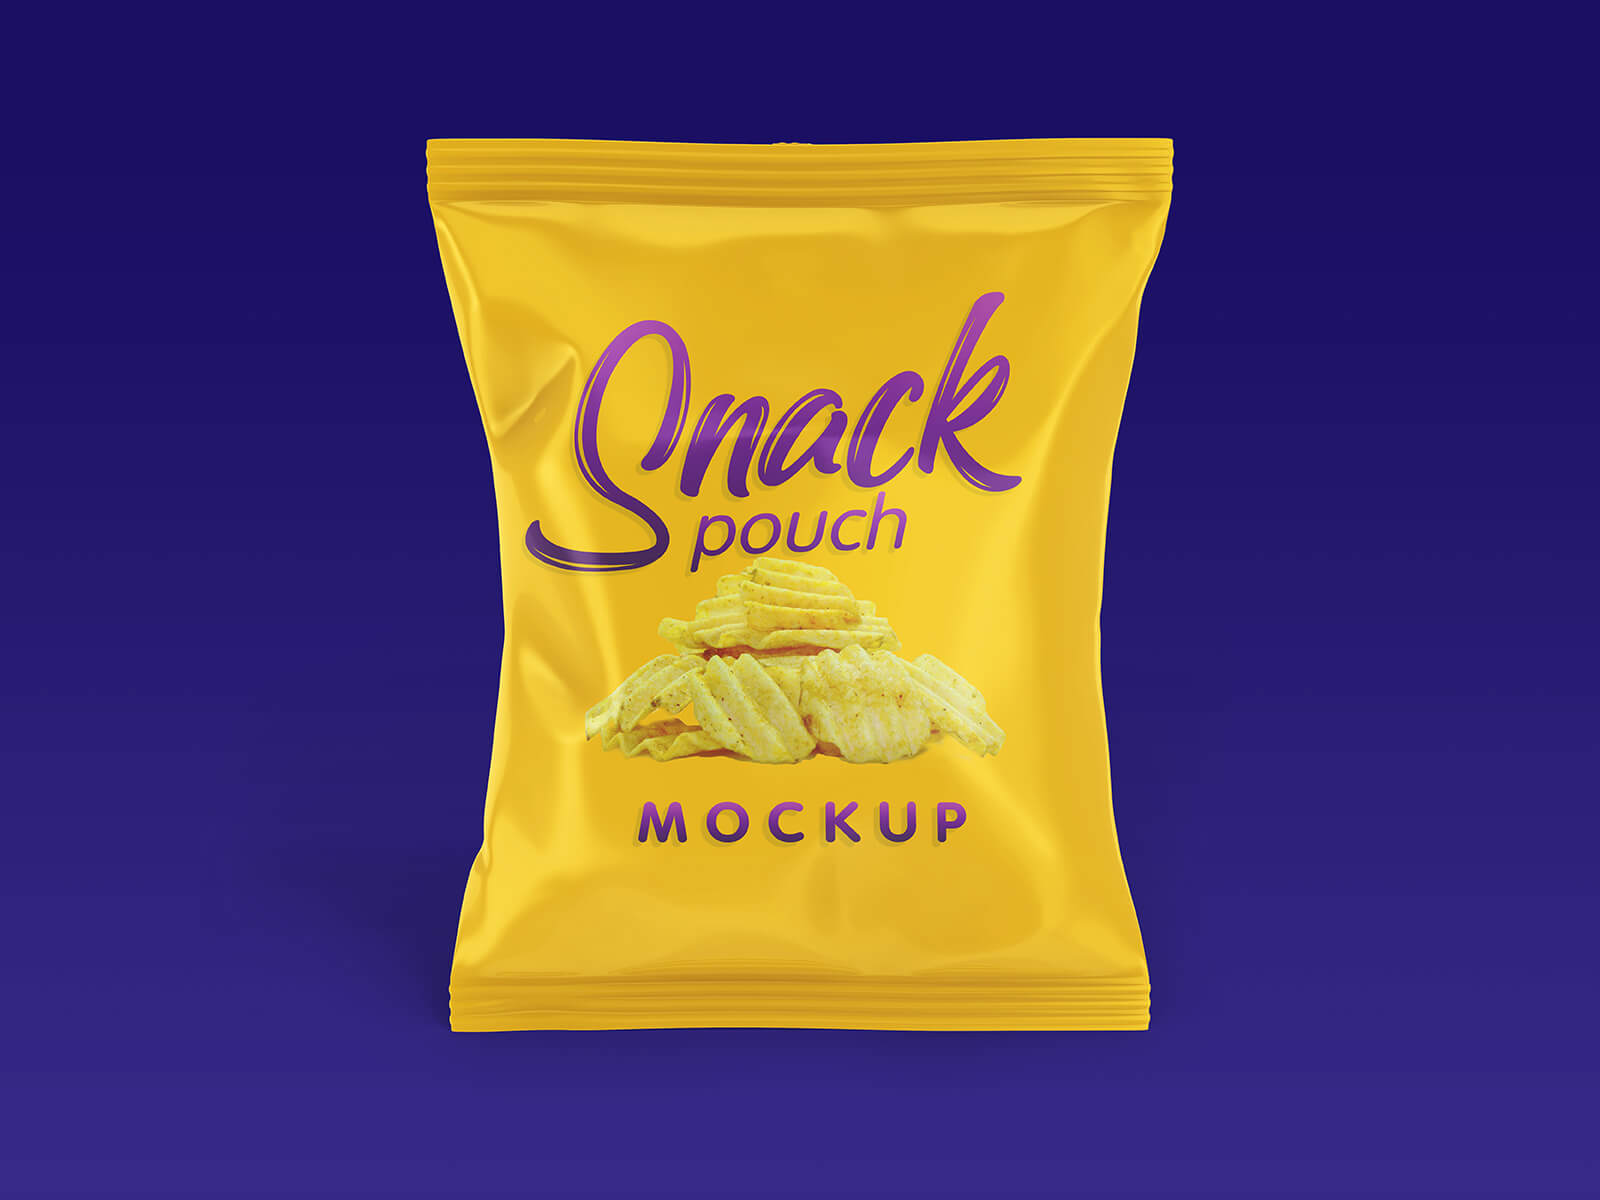 Snack Popch Packaging Mockup